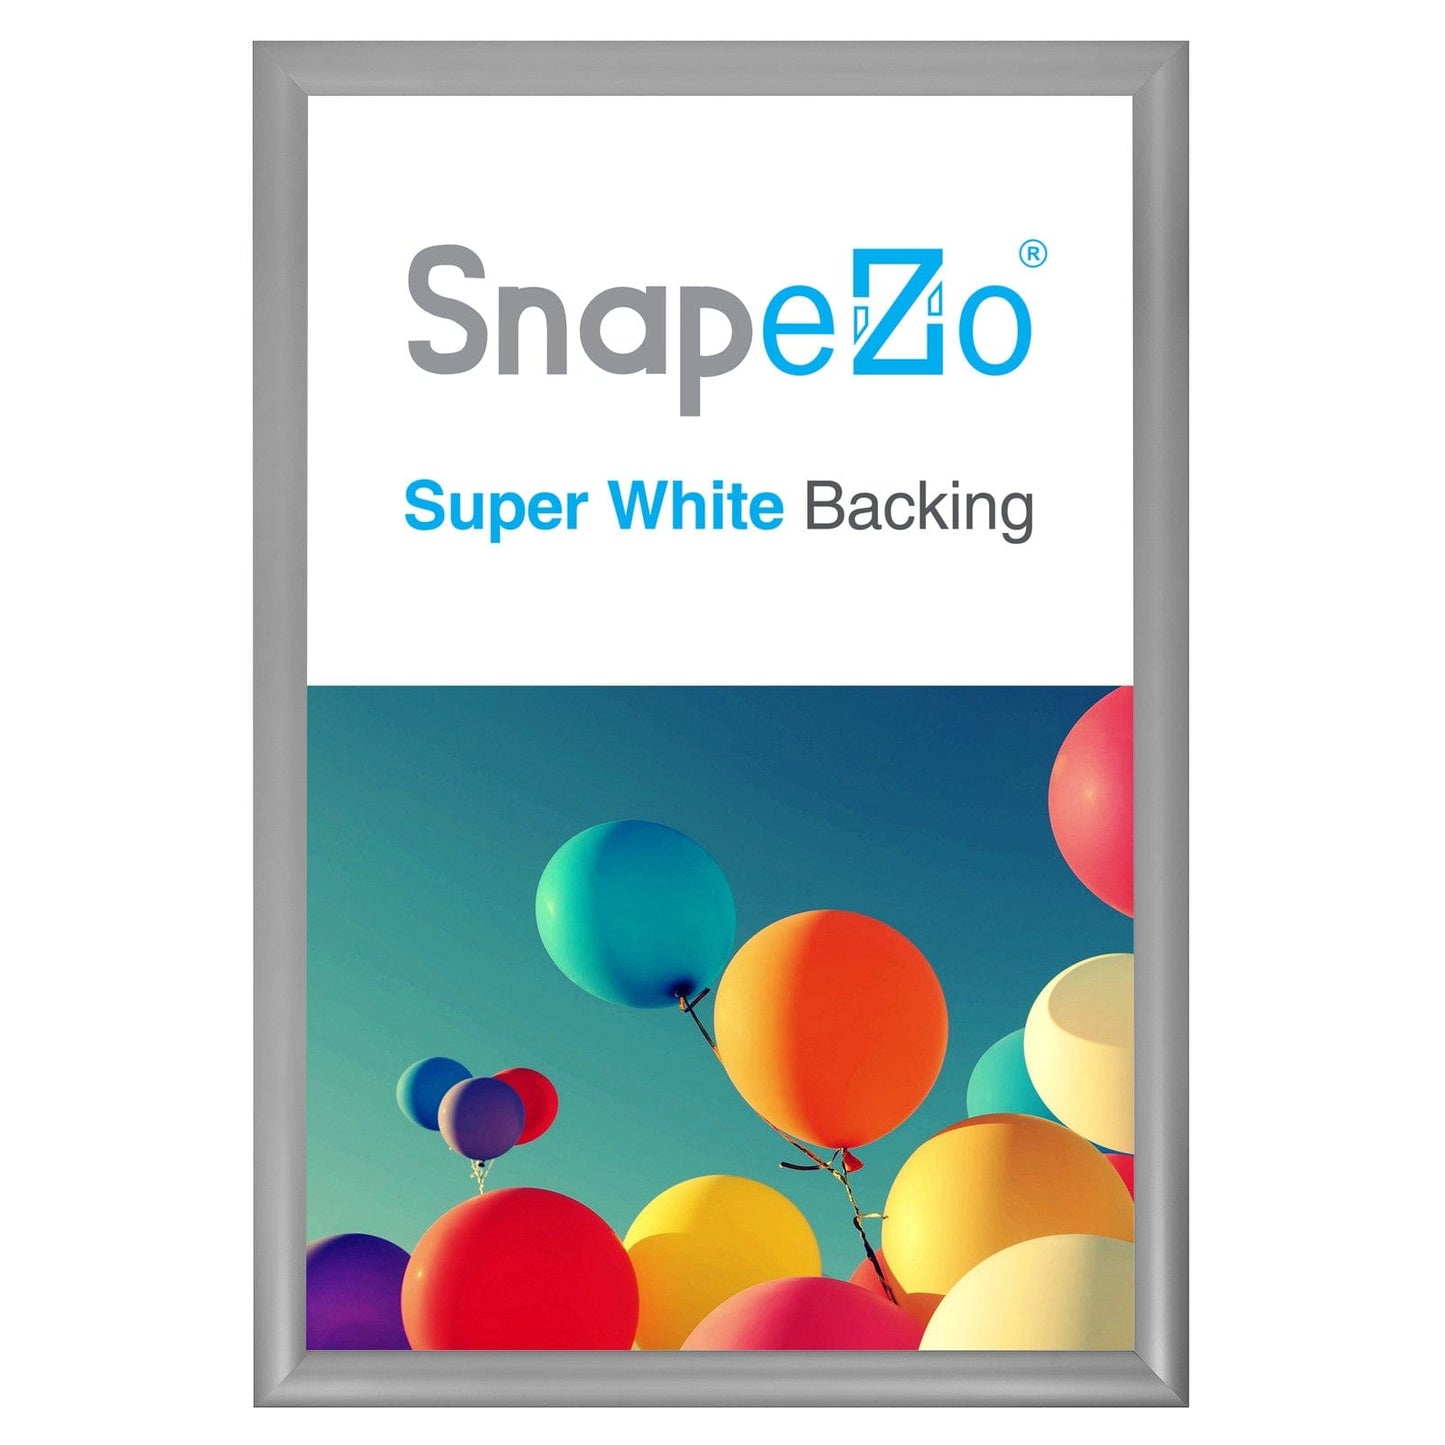 19x28 Silver SnapeZo® Snap Frame - 1.2" Profile - Snap Frames Direct